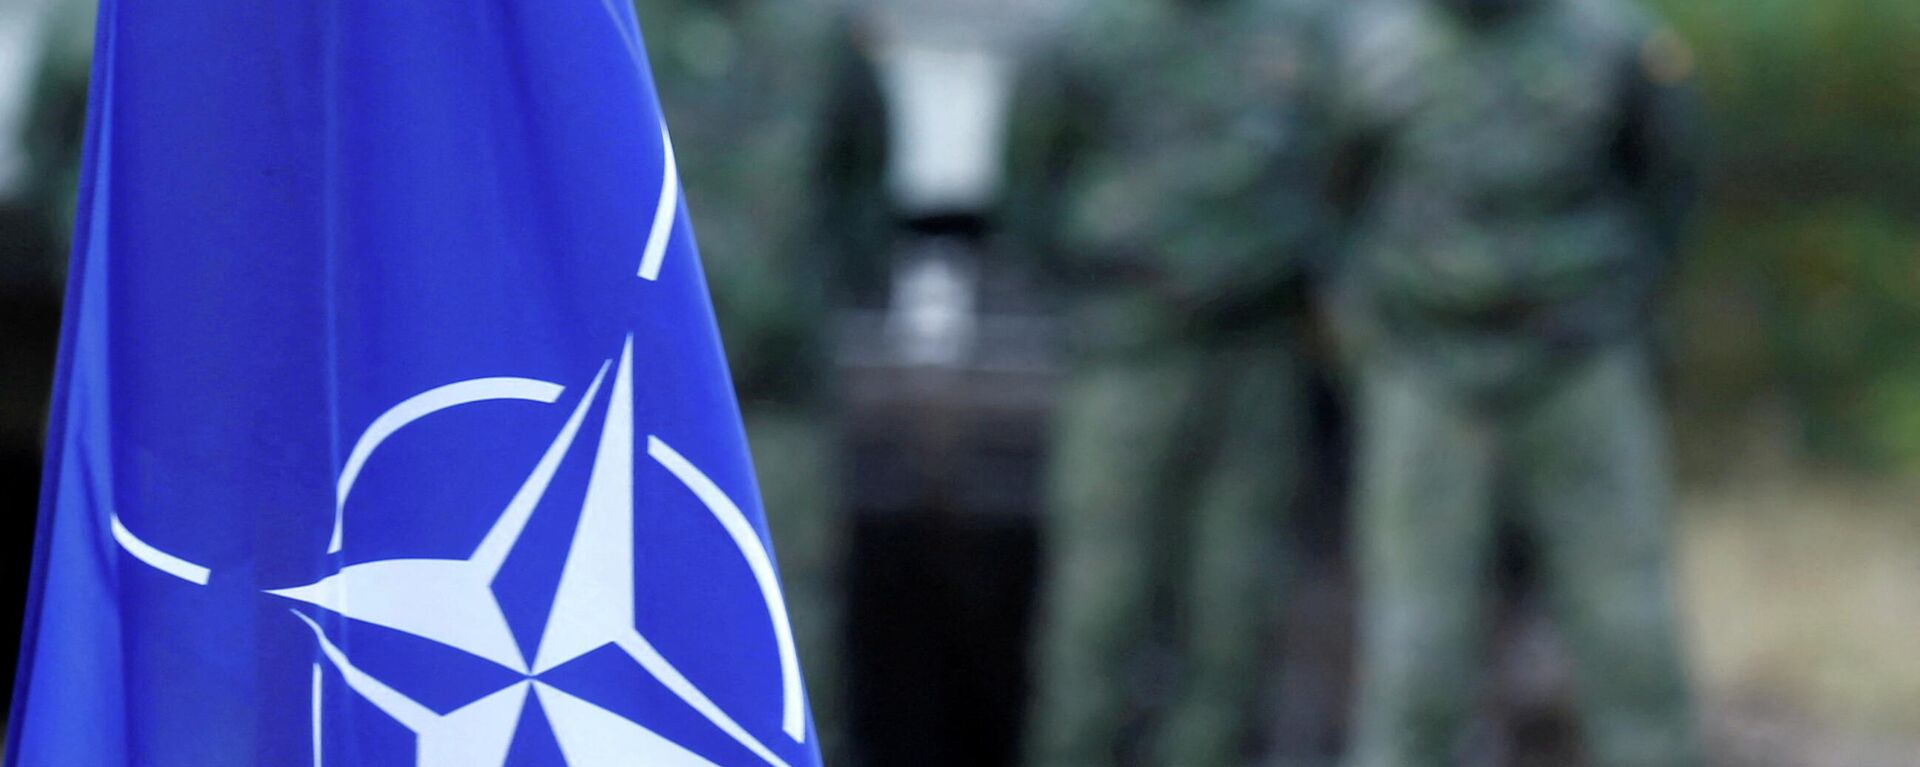 NATO flag is seen during NATO enhanced Forward Presence battle group military exercise Silver Arrow in Adazi, Latvia October 5, 2019. REUTERS/Ints Kalnins/File Photo - Sputnik International, 1920, 19.02.2022